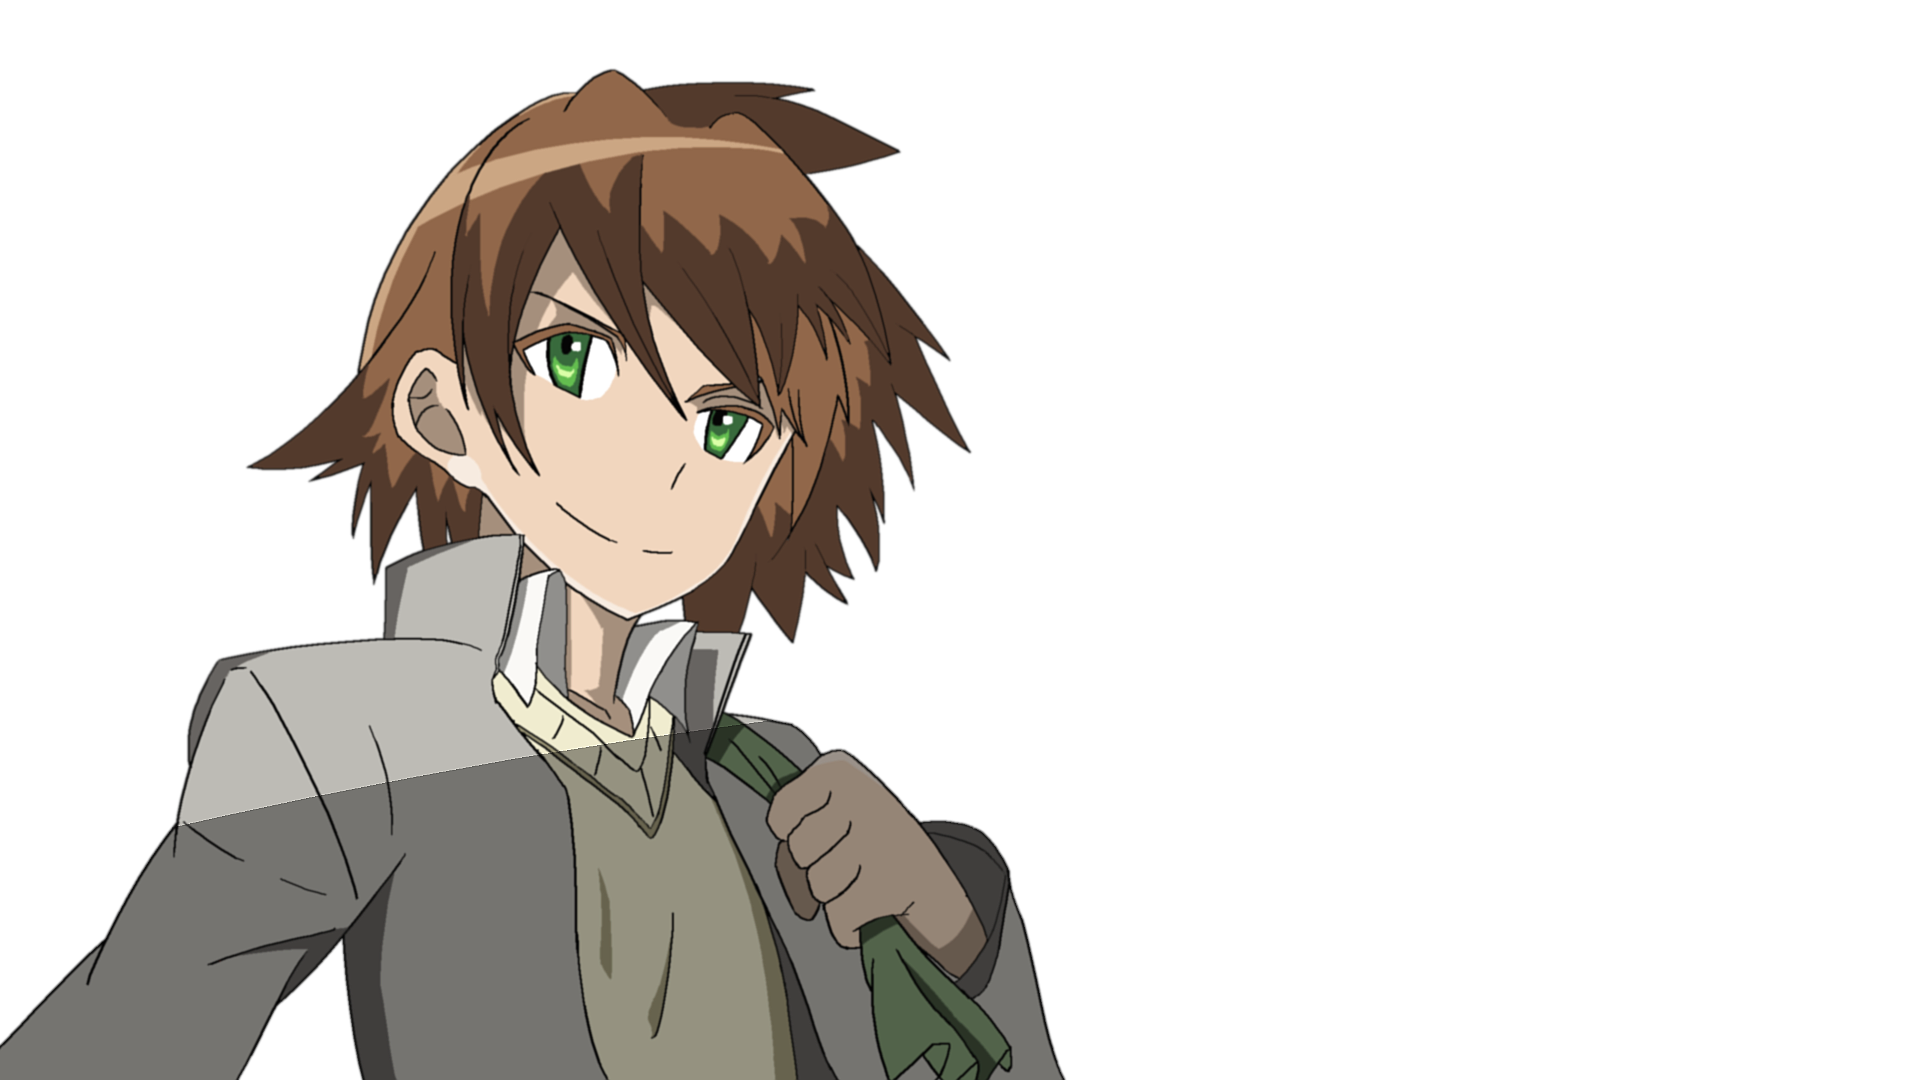 Anime 1920x1080 Tatsumi Akame ga Kill! anime boys green eyes simple background anime black background